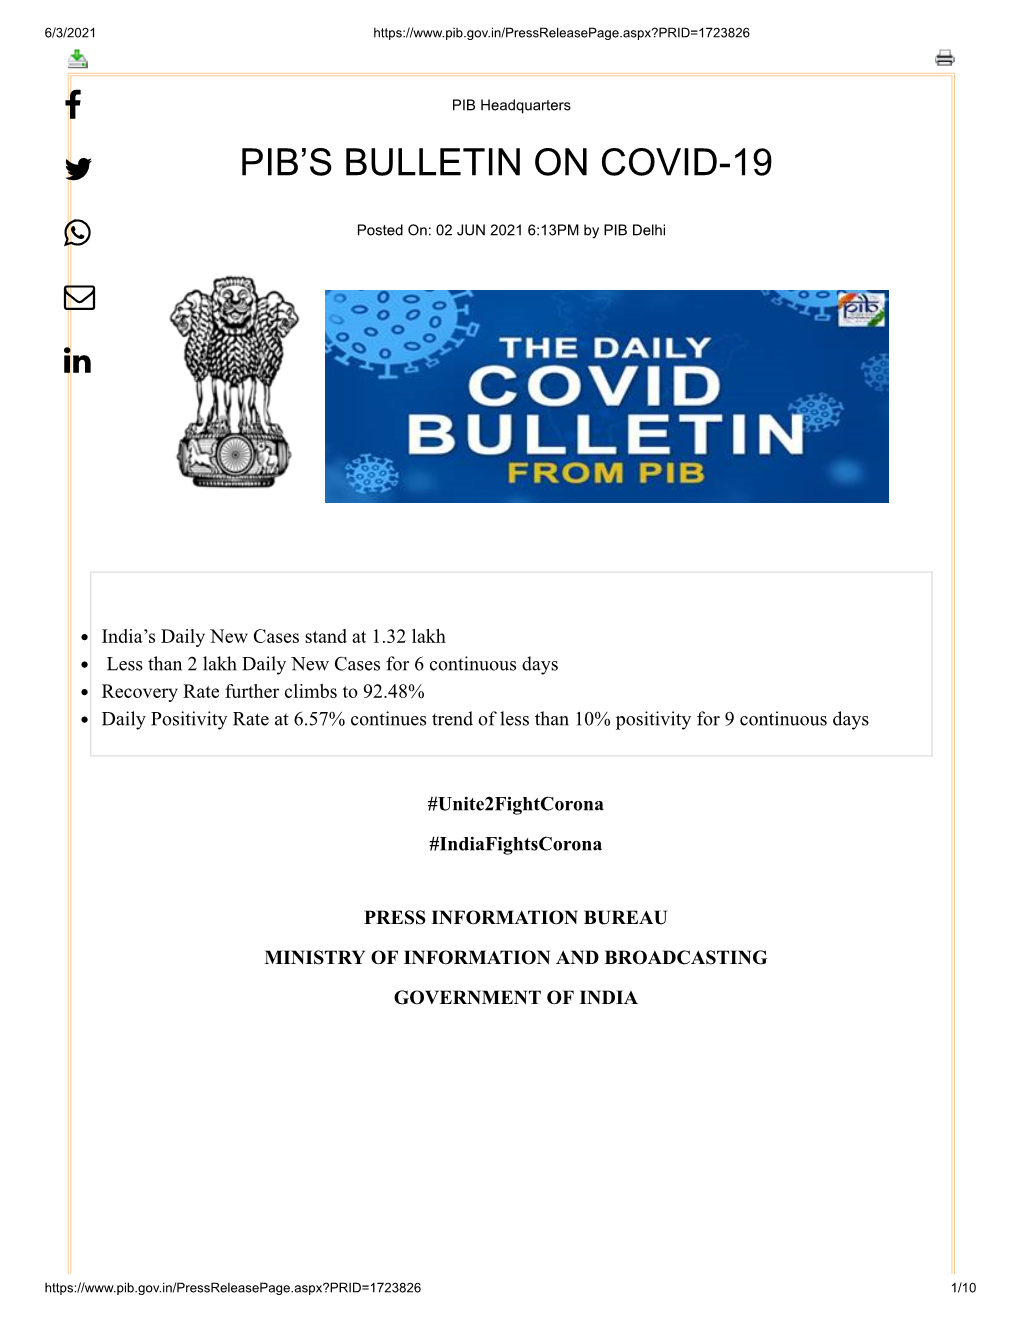 Pib's Bulletin on Covid-19